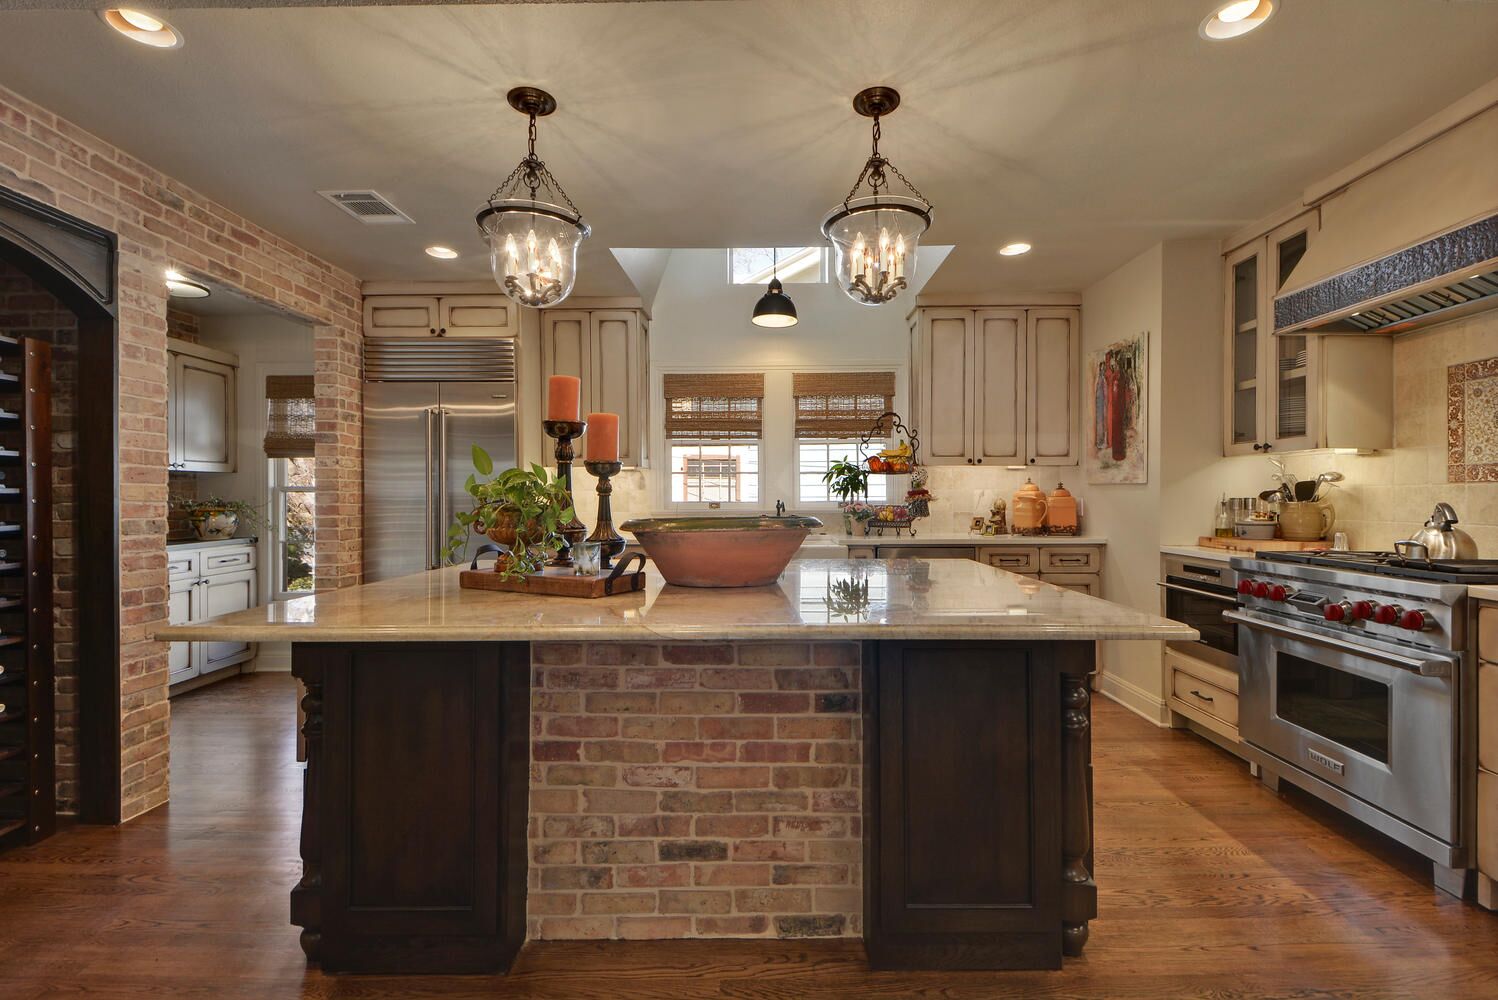 Kitchen design with beautiful kitchen island lighting